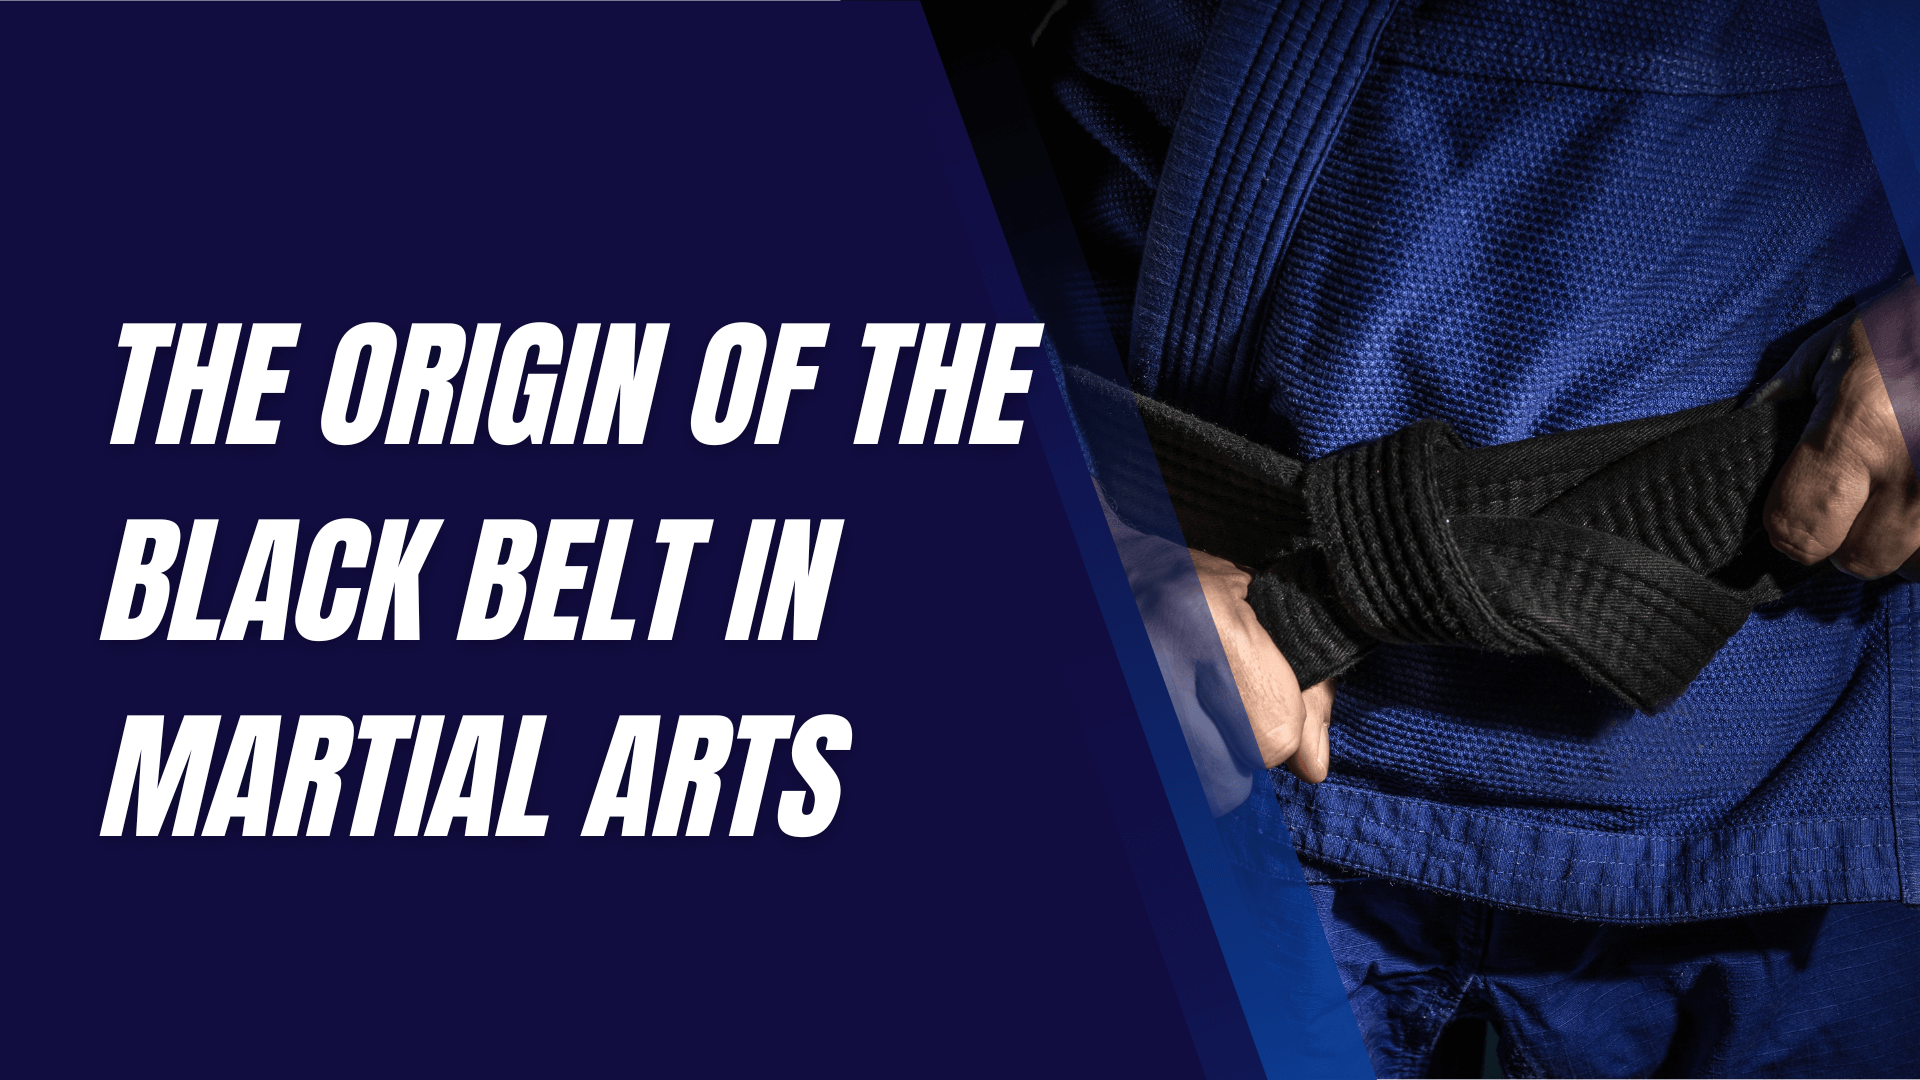 Black belt Martial Artist